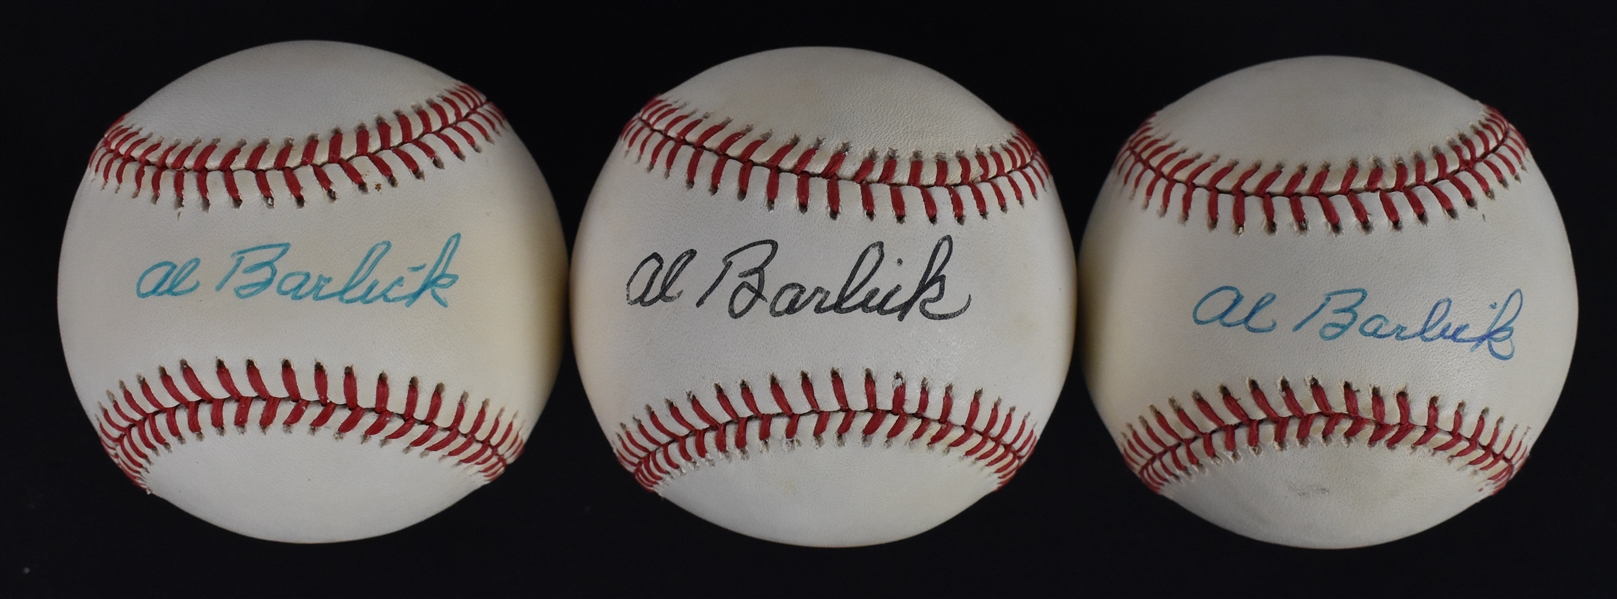 Collection of 3 Autographed Baseballs w/Al Barlick